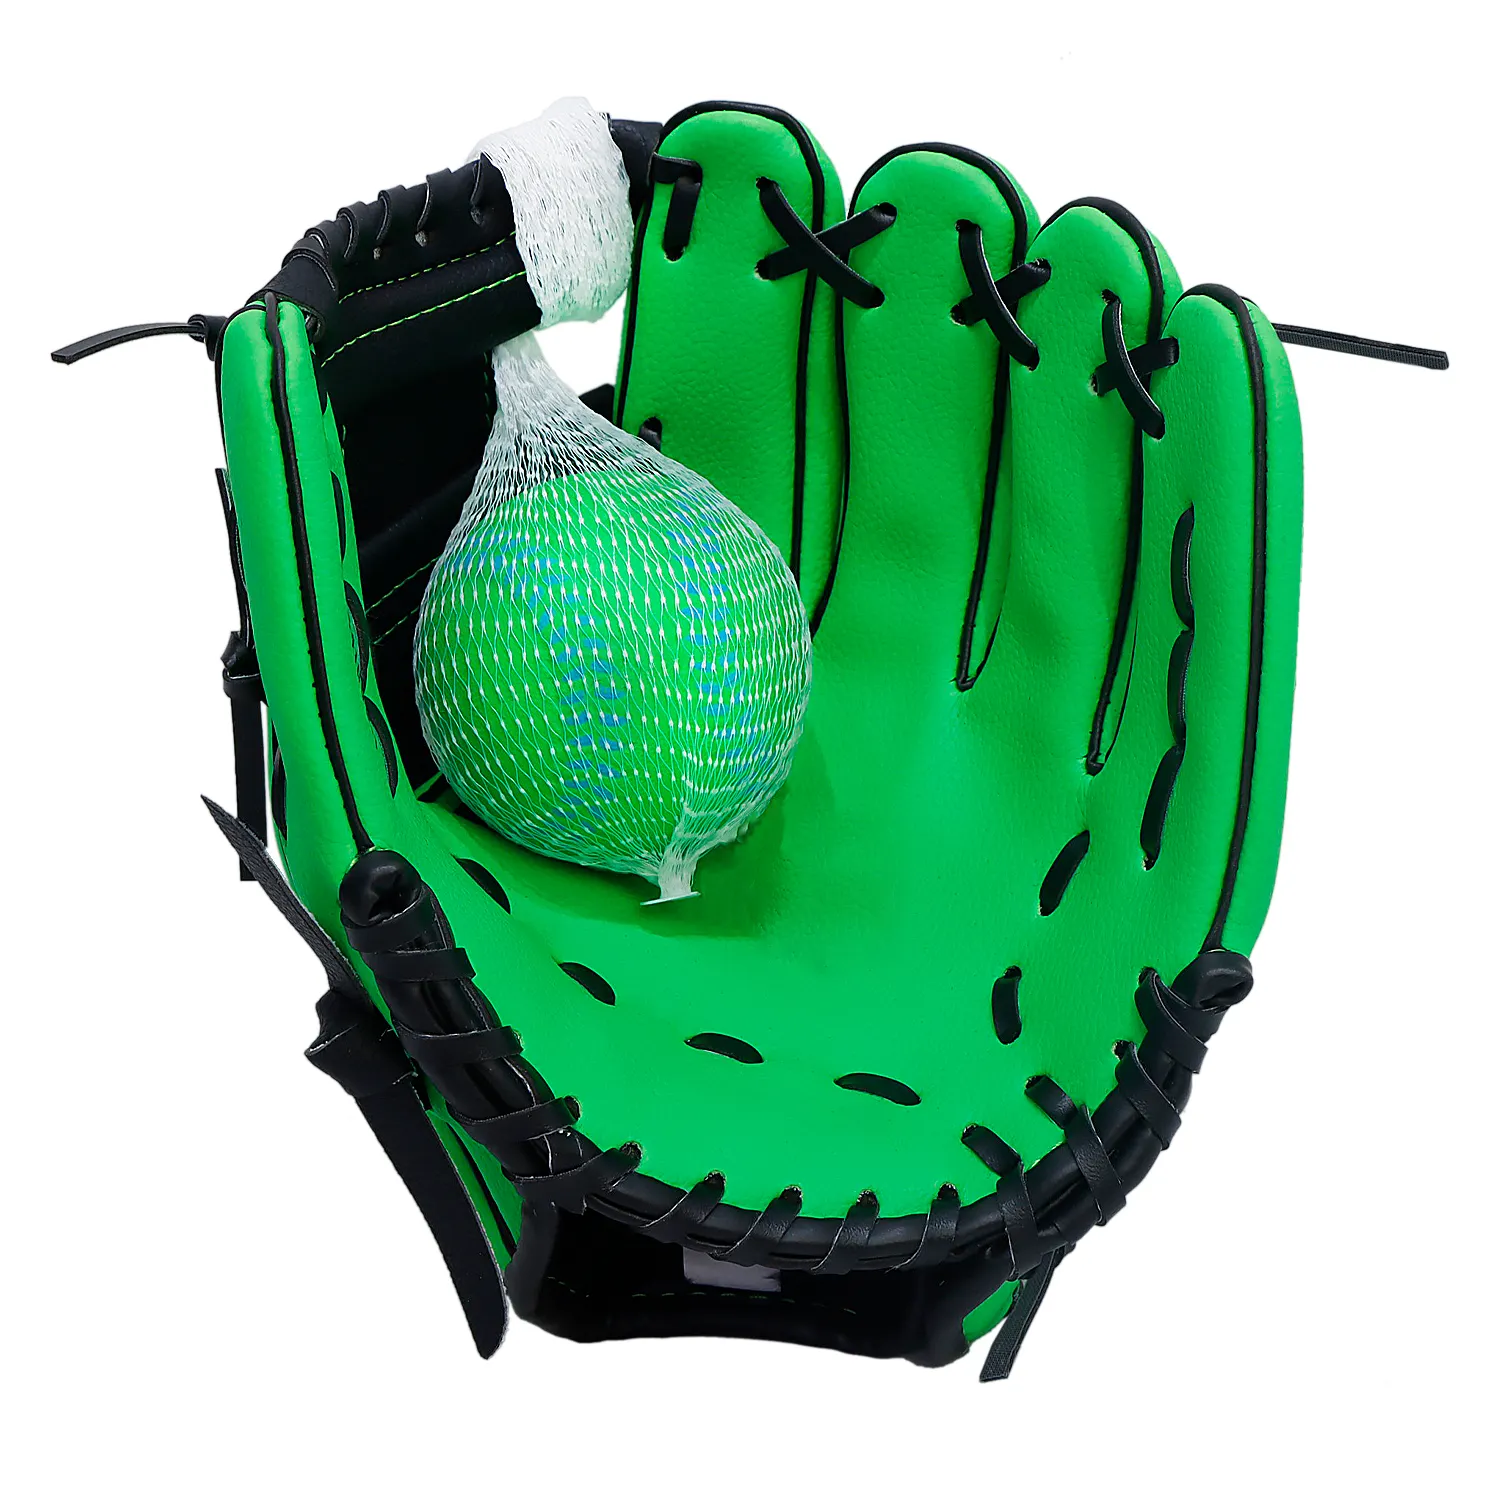 Baseball Glove Tee Ball Mitts with Foam Ball for Kids Play & Training